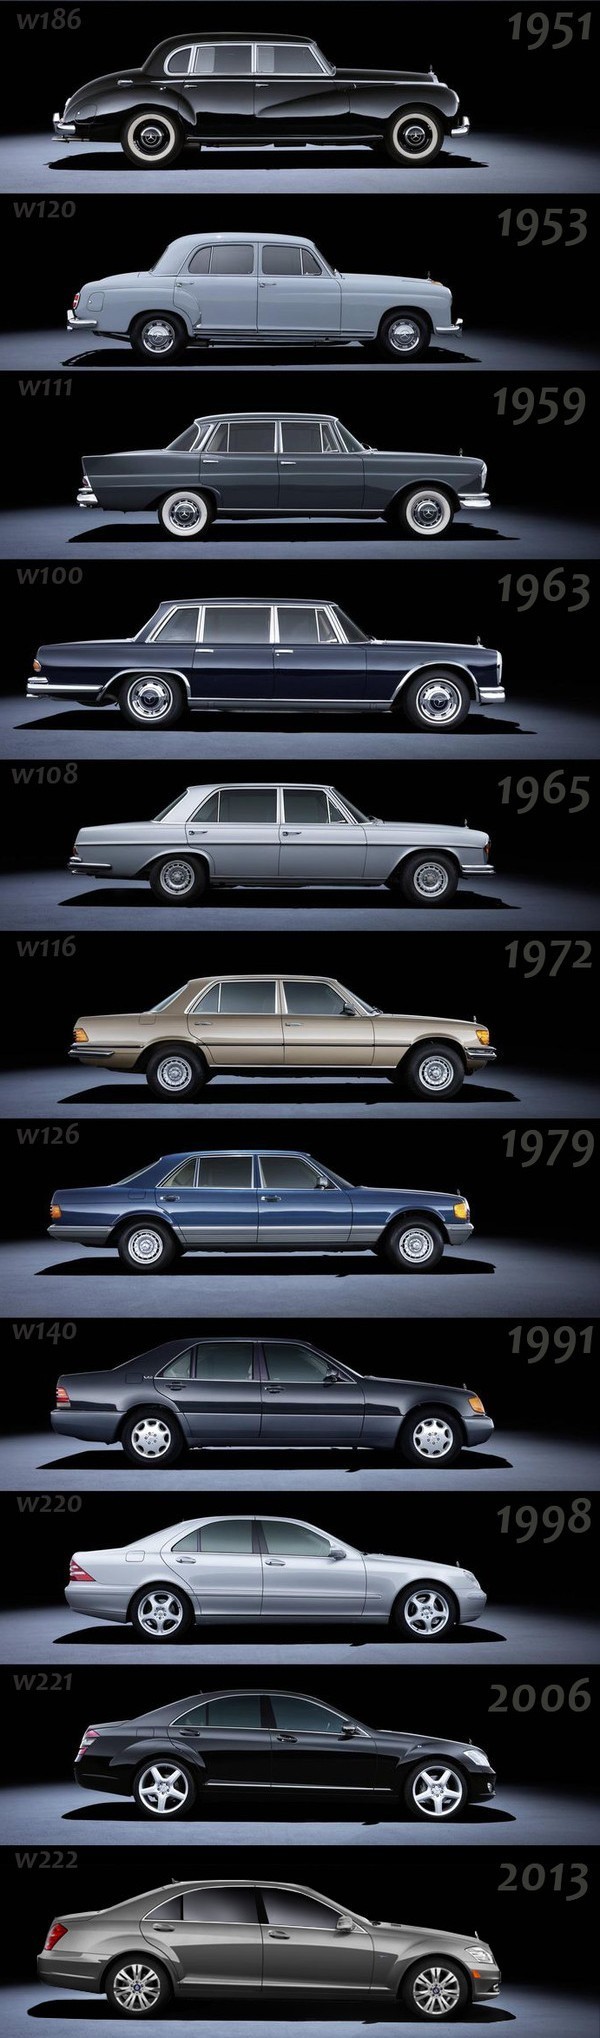 Mercedes-Benz - 110 лет развития